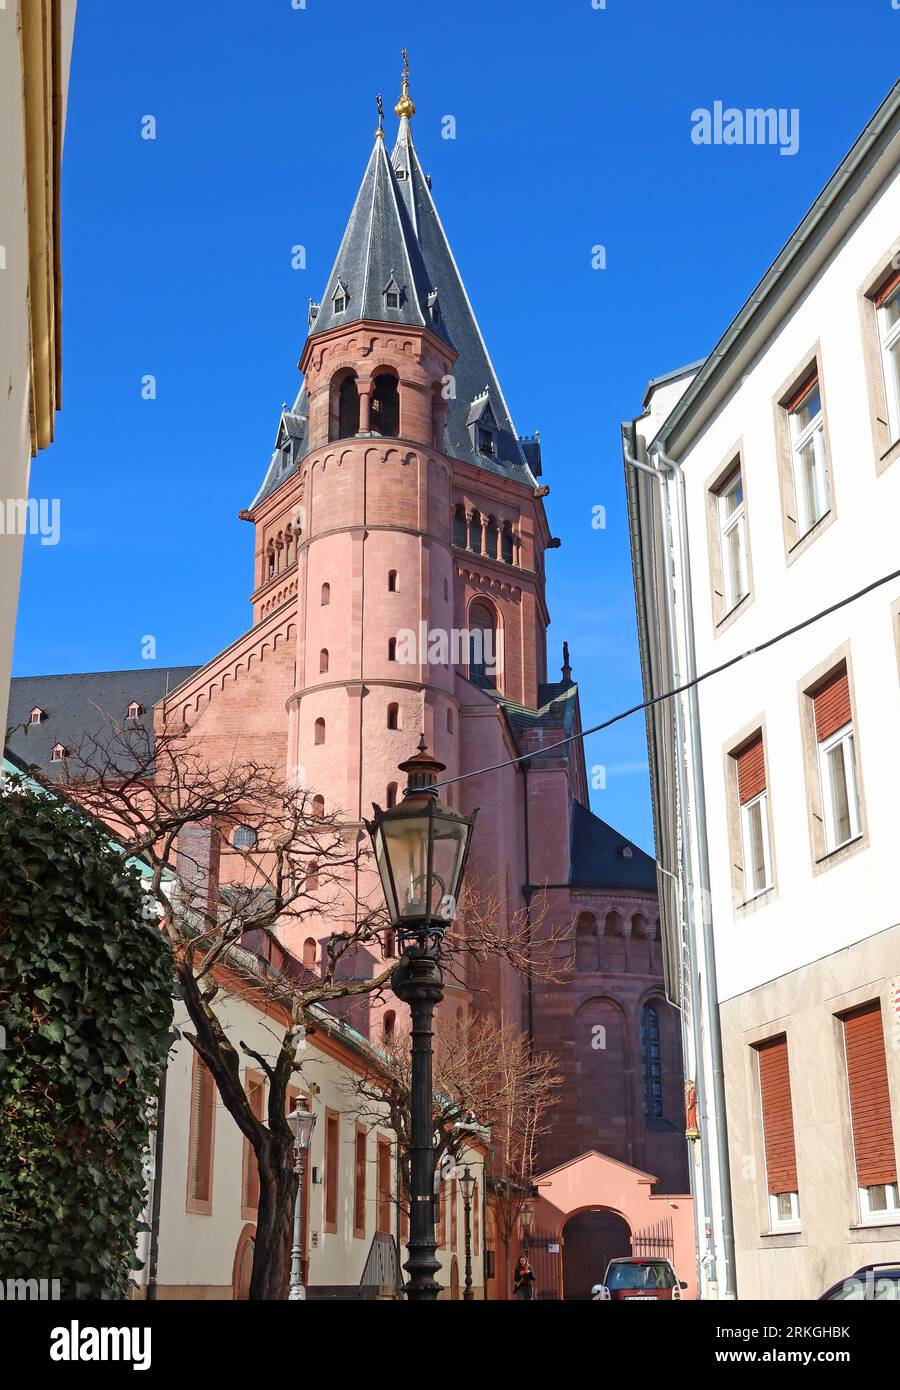 St. Martin's Cathedral, Liebfrauenpl. 4, 55116 Mainz City Centre, Rhineland-Palatinate Land, Germany Stock Photo